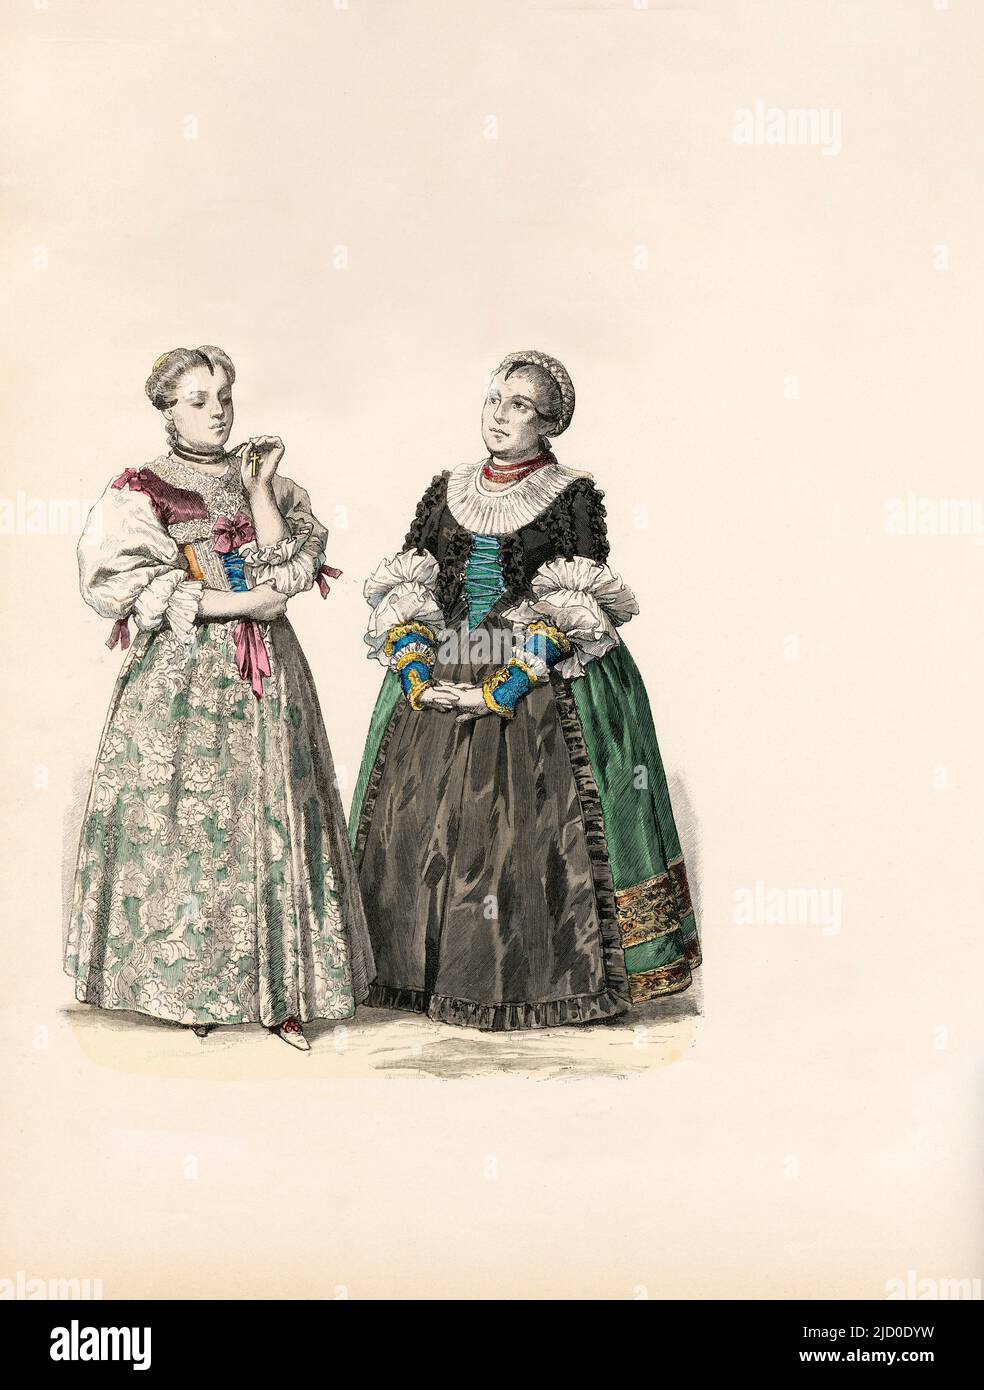 Classe moyenne allemande, fille et femme d'Augsbourg, 1770-1790, Illustration, l'histoire du costume, Braun & Schneider, Munich, Allemagne, 1861-1880 Banque D'Images